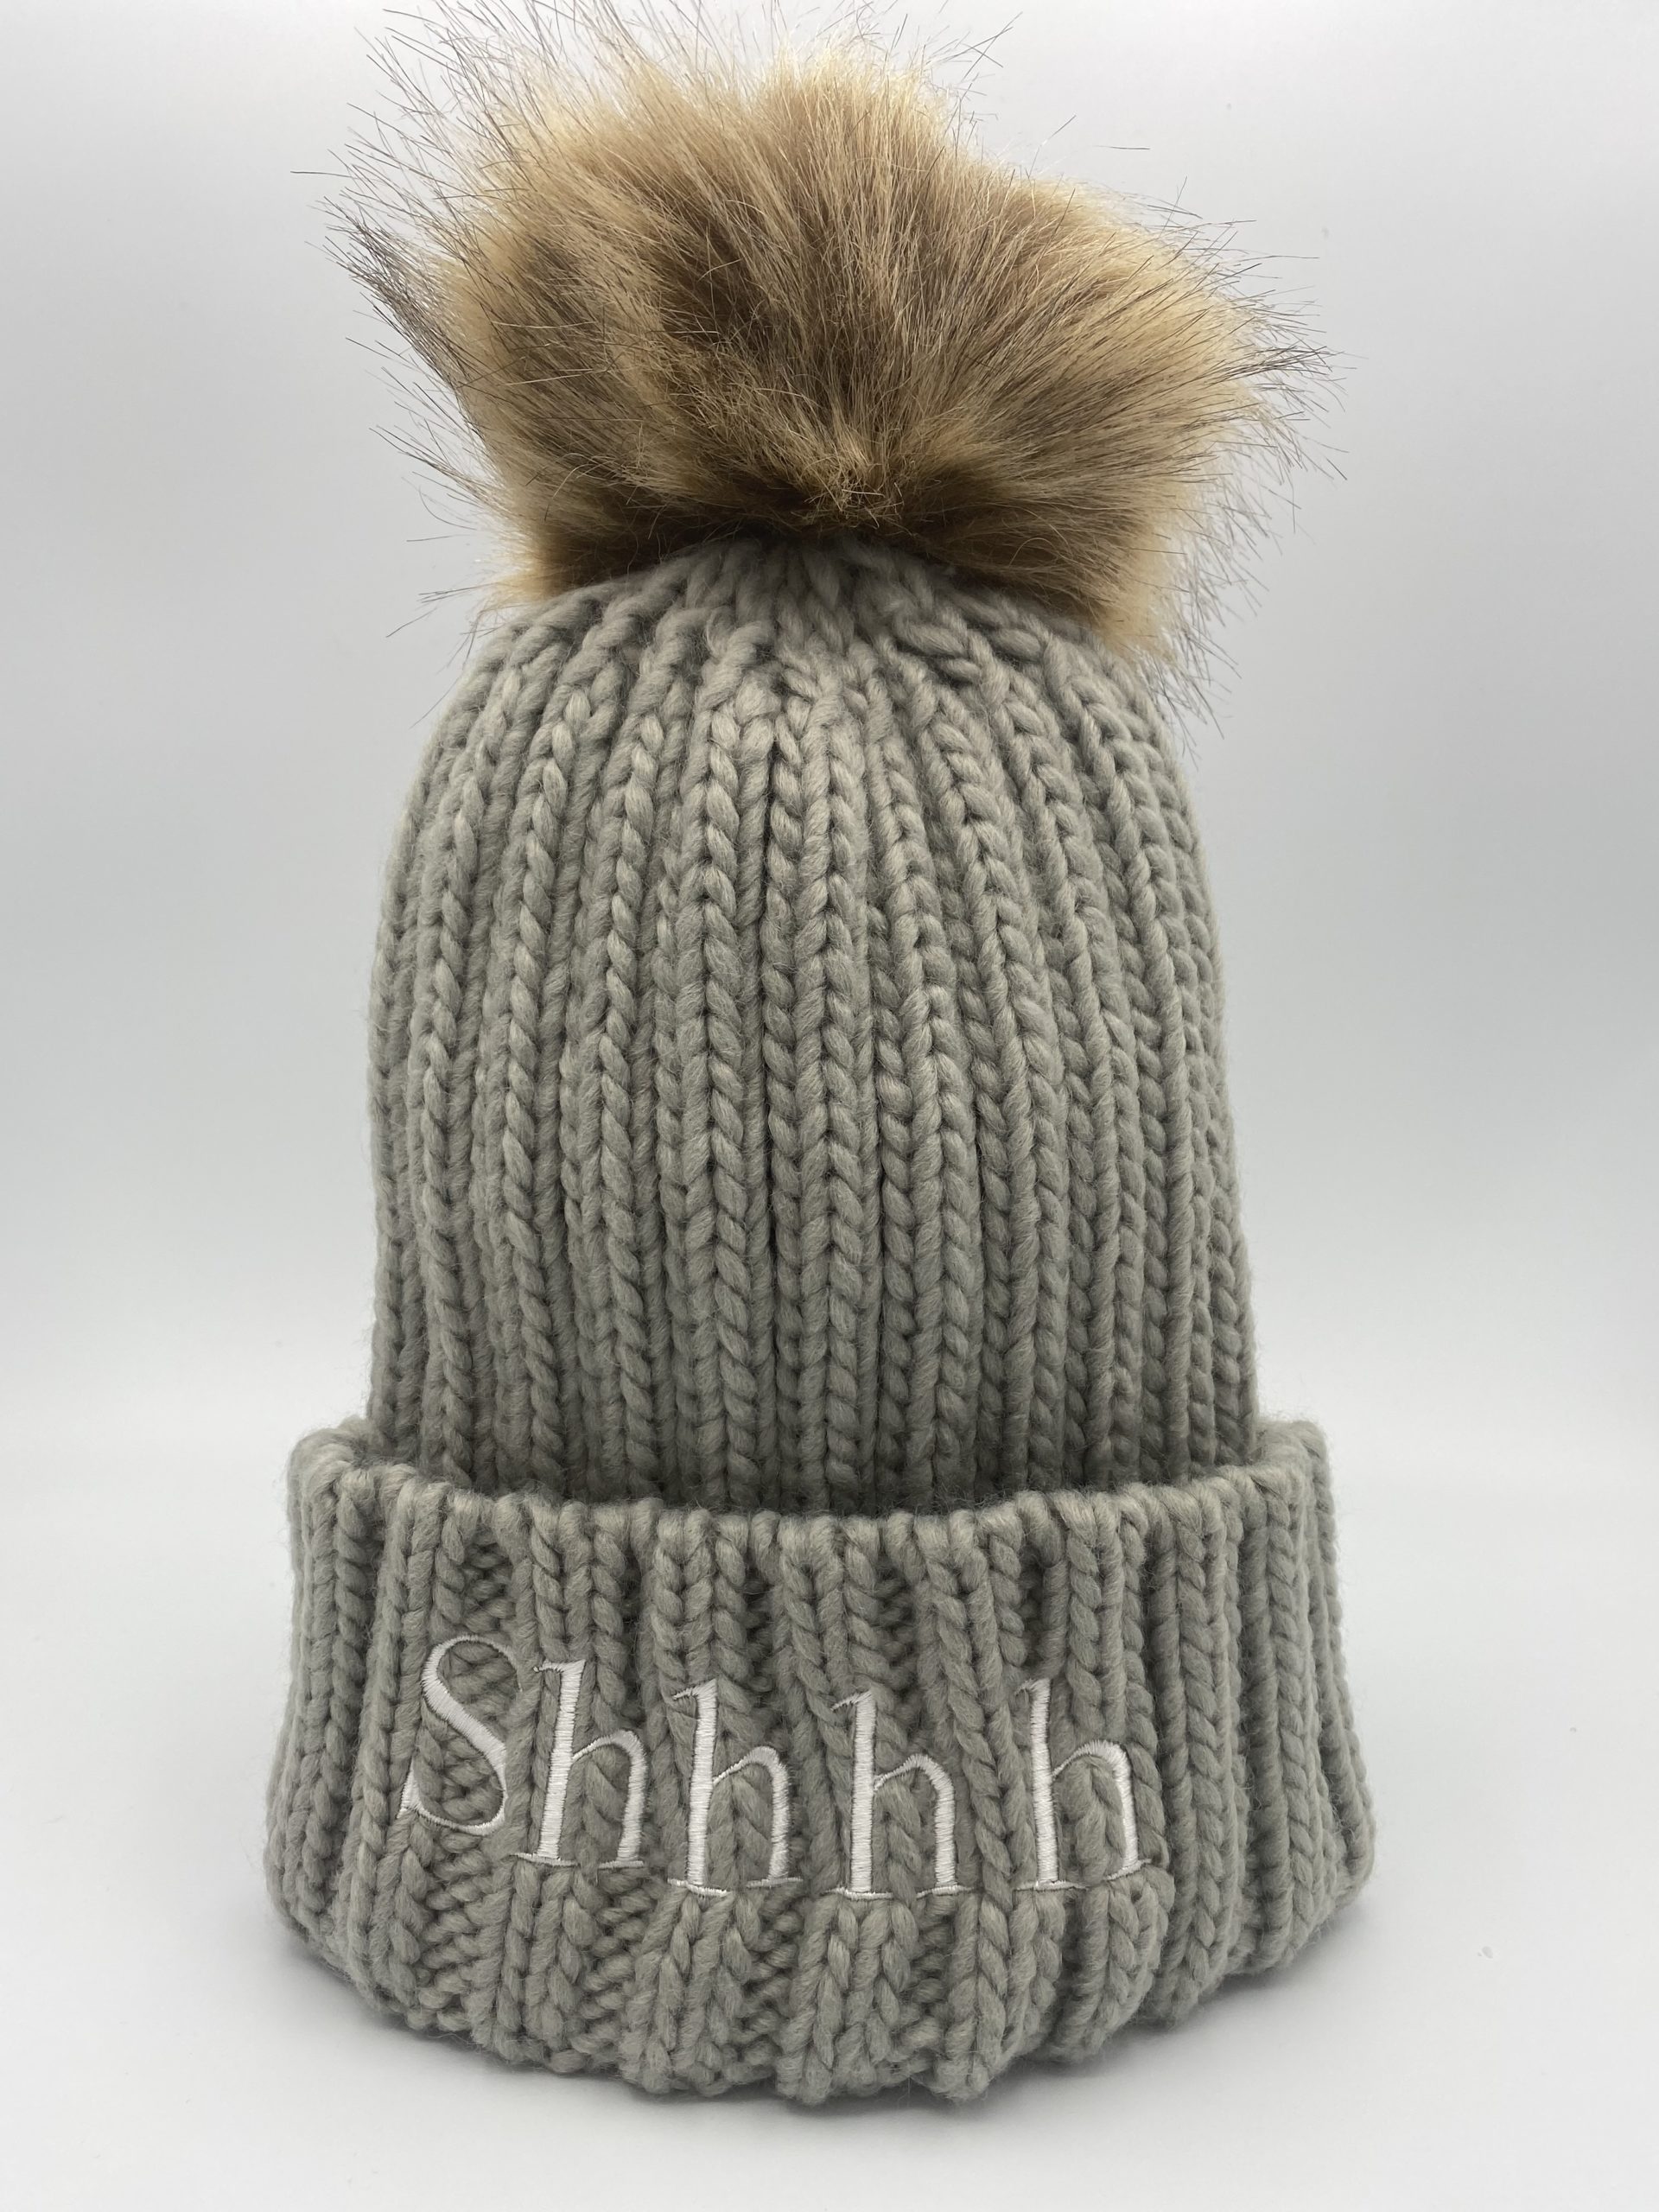 Grey Shhhh pom-pom chunky knit hat - Jodi Ellen Malpas